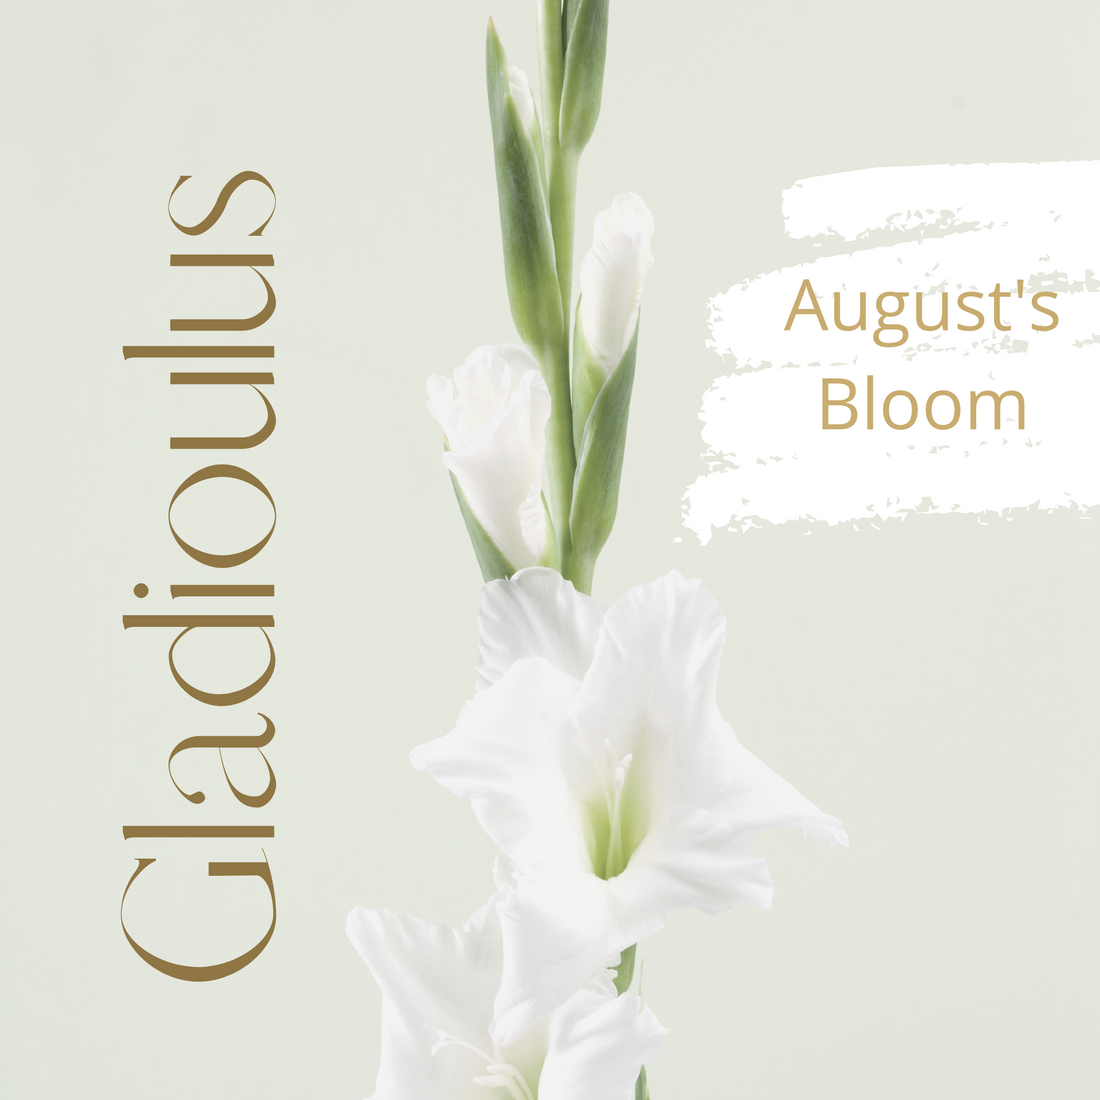 August's Birthday Bloom ~The Gladiolus